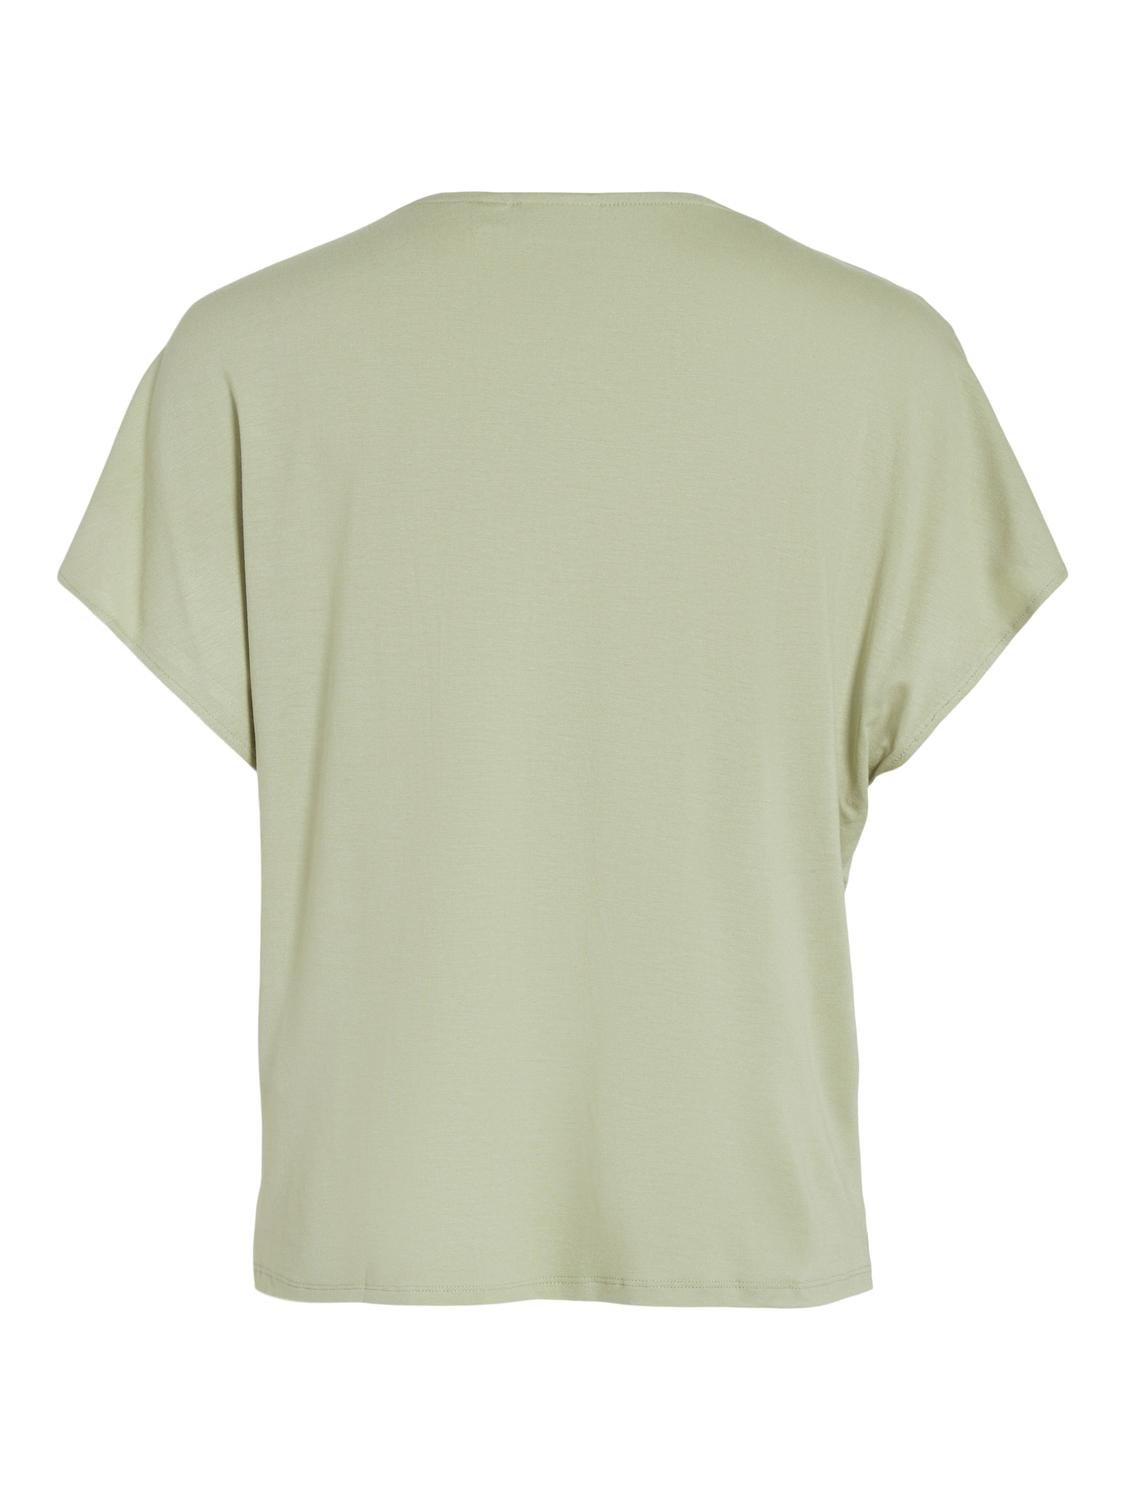 VIELLETTE T-Shirts & Tops - Swamp